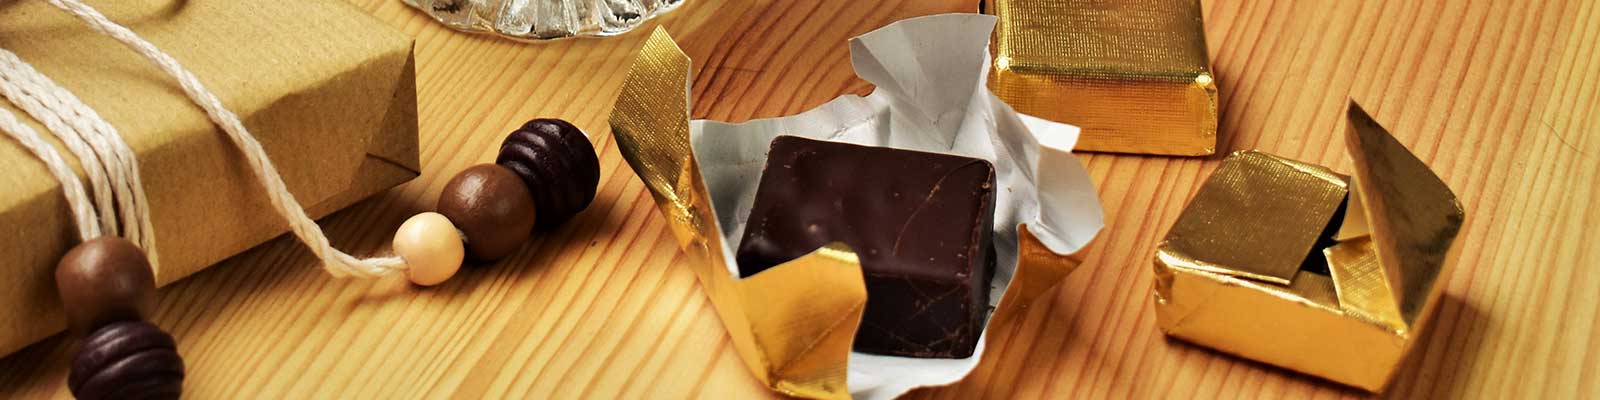 Chocolala Handmade Chocolates, Cakes, Ice creams UAE